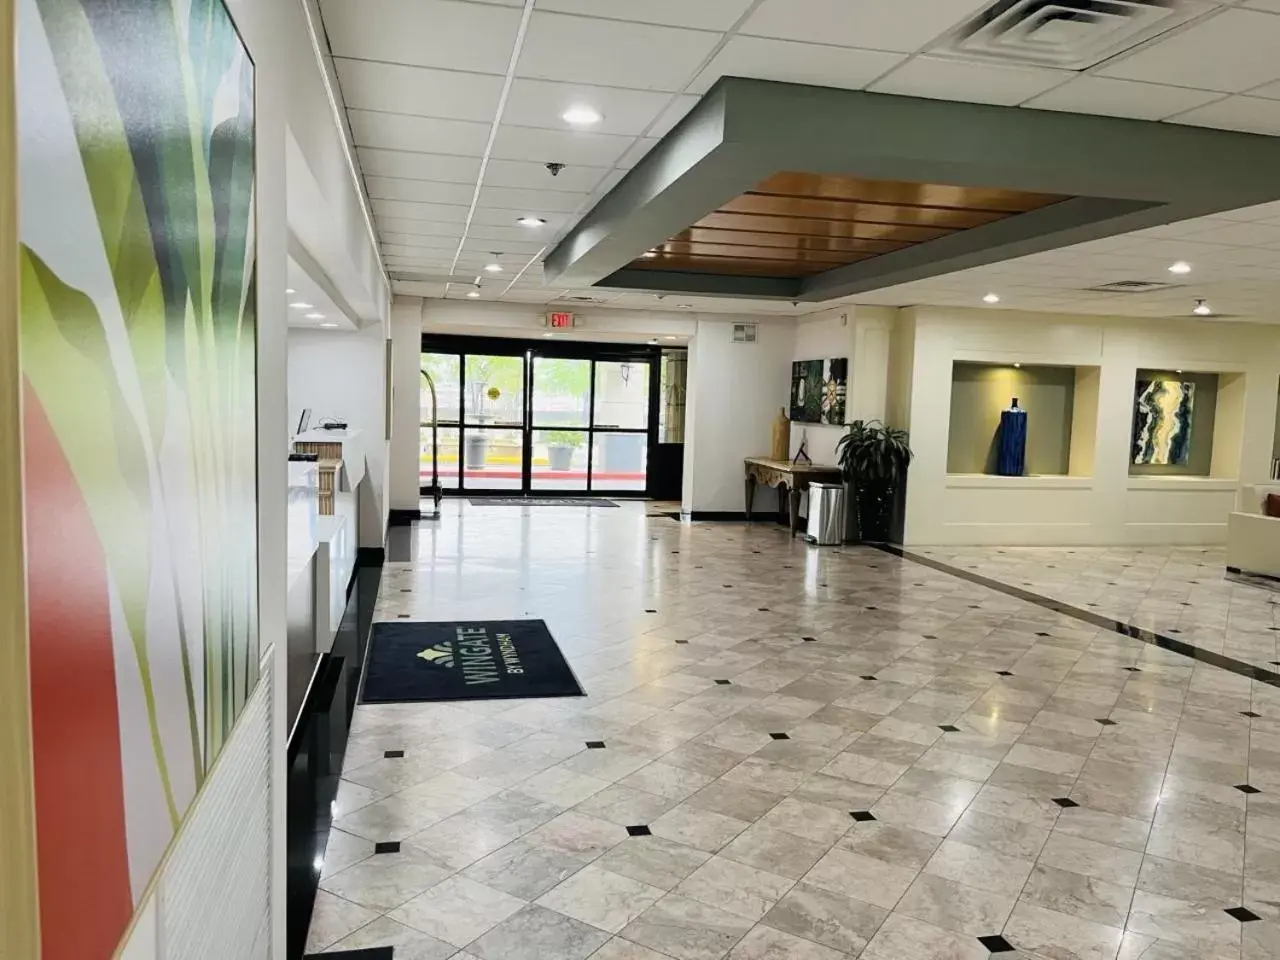 Lobby or reception in Wingate Houston near NRG Park/Medical Center